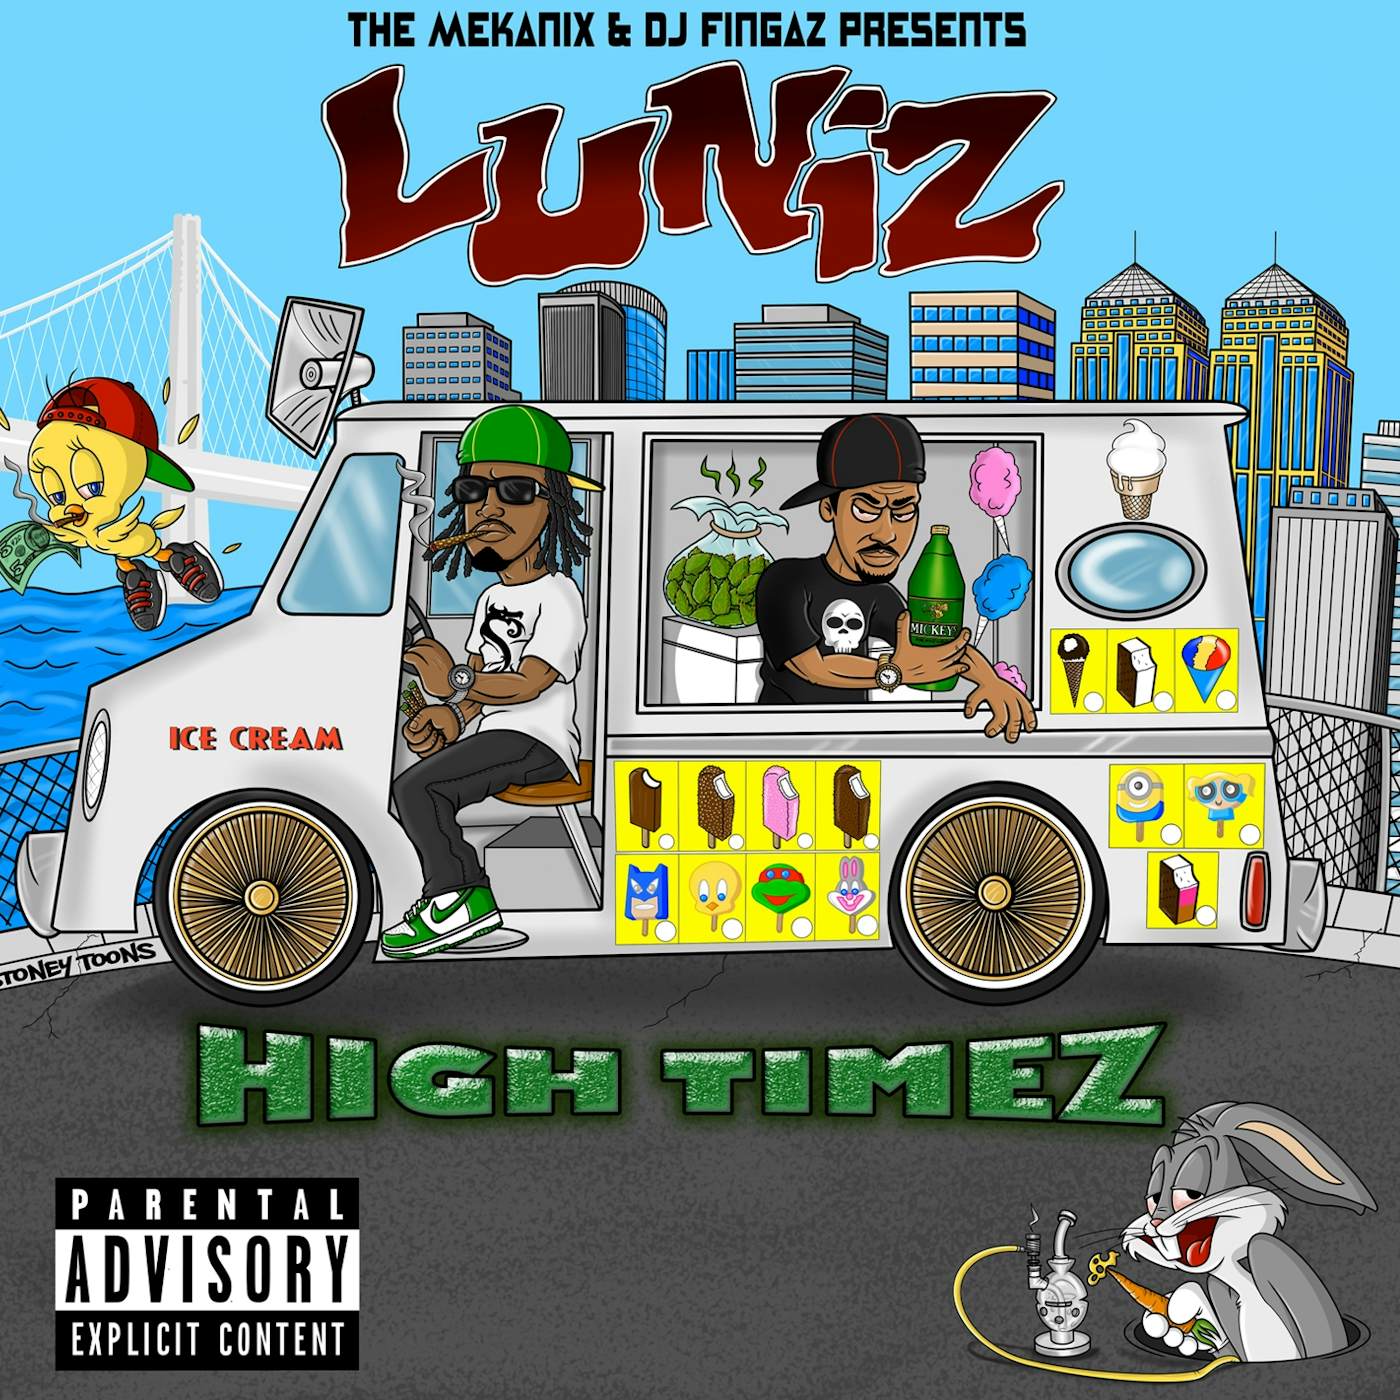 Luniz HIGH TIMES CD